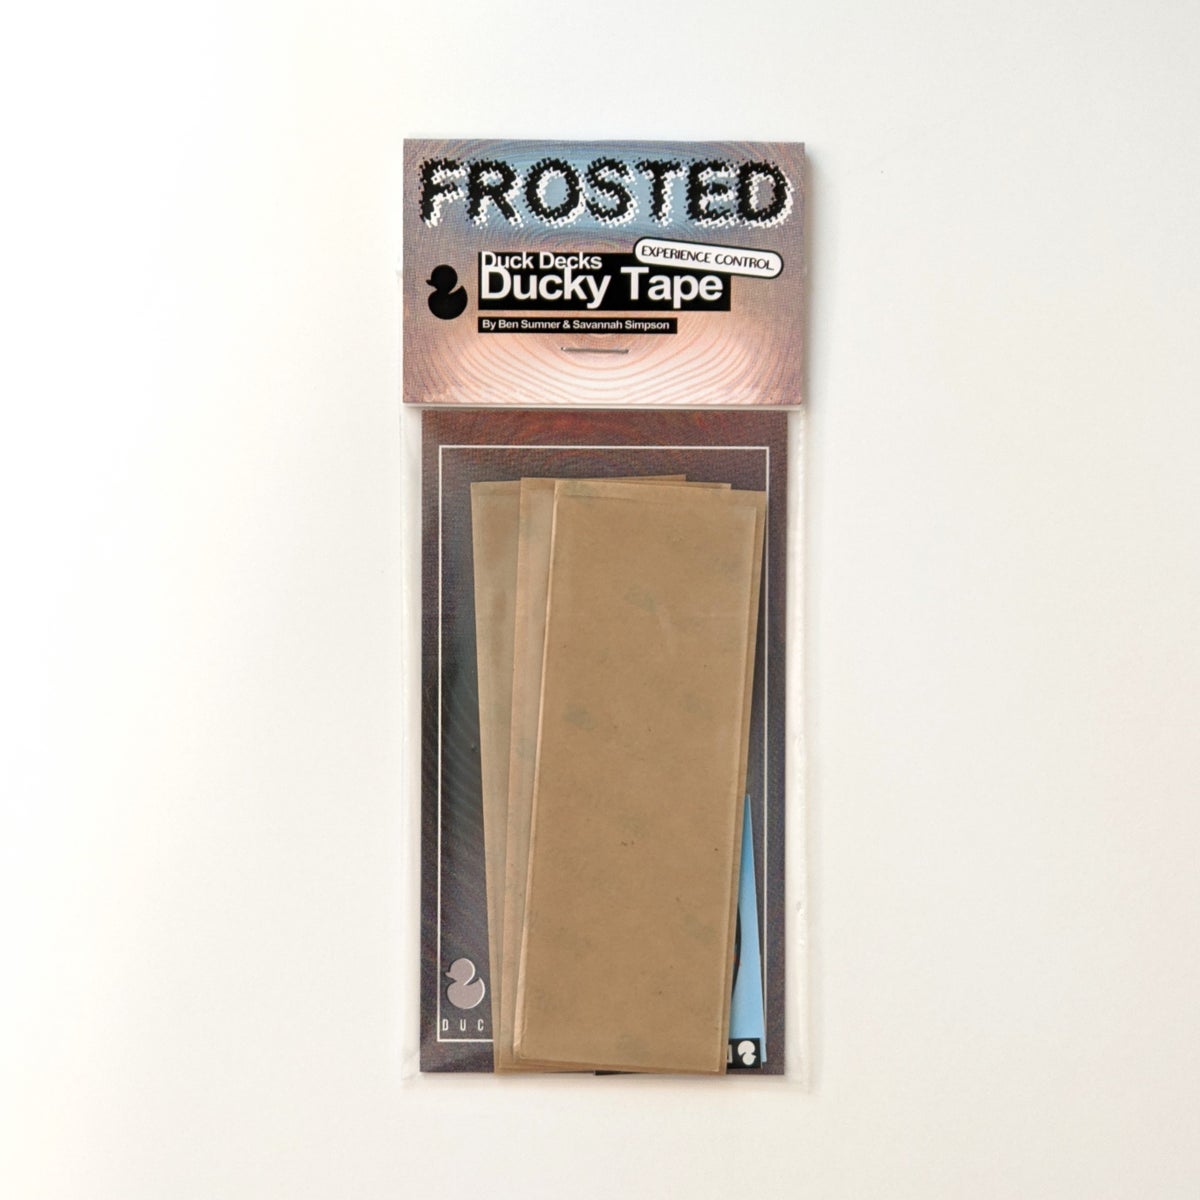 Frosted 3-Pack Duck Decks Ducky Tape Fingerboard Grip